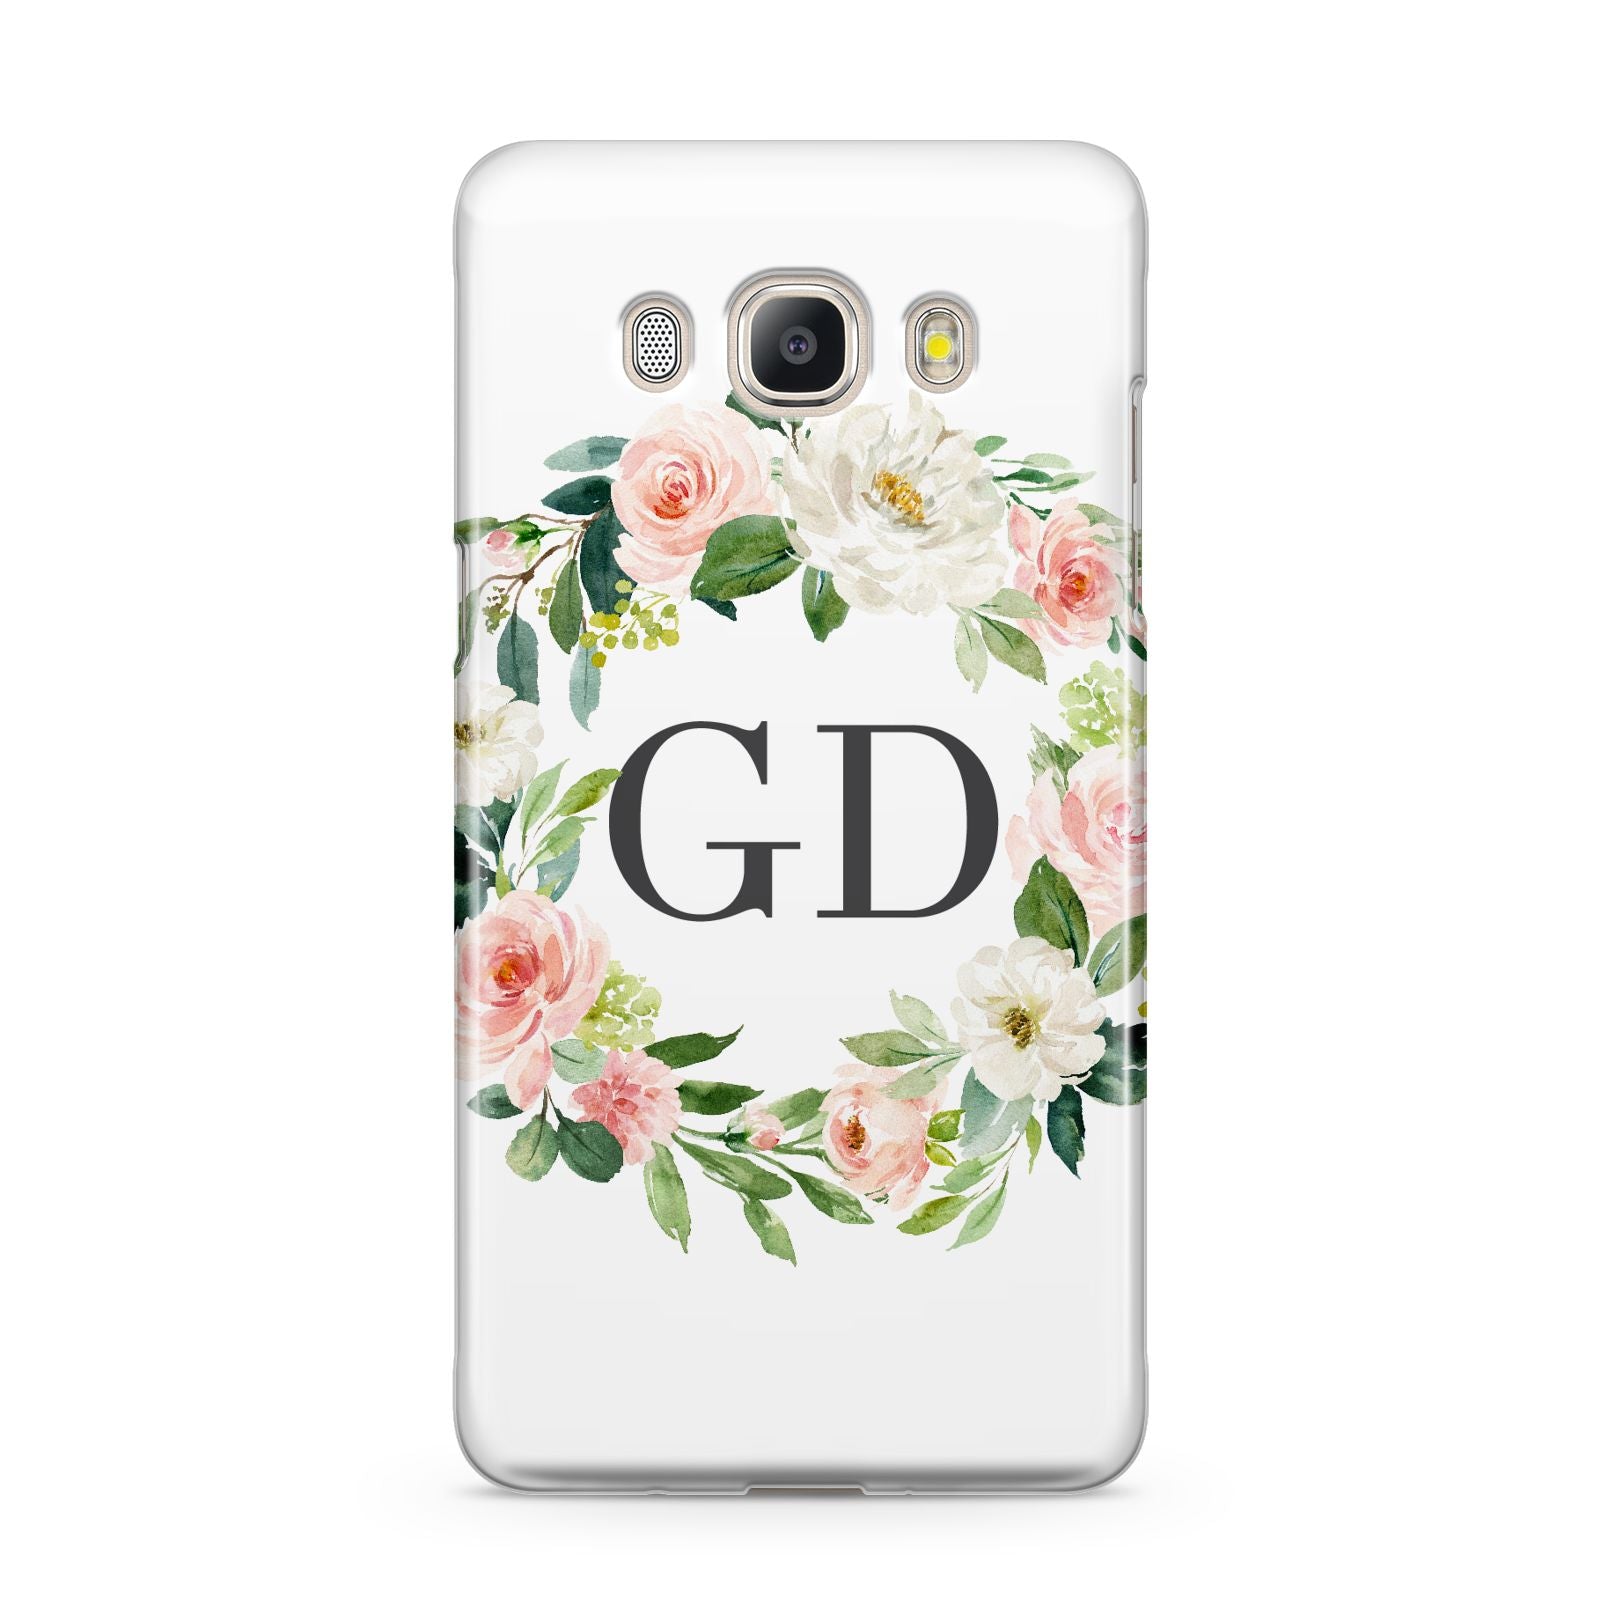 Personalised floral wreath Samsung Galaxy J5 2016 Case